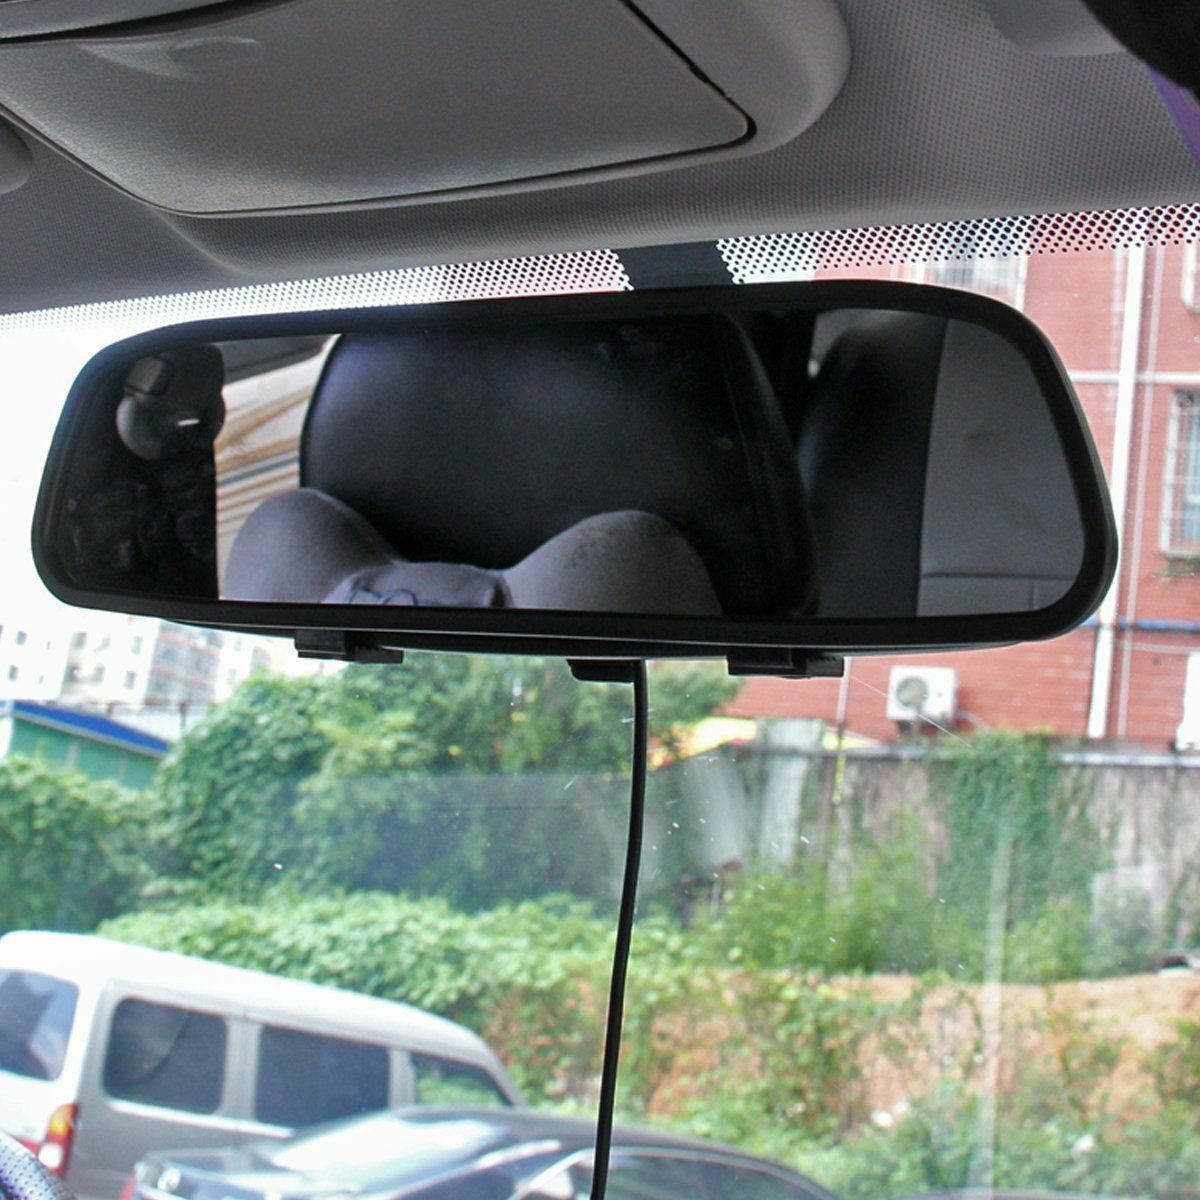 Car-Rear-View-5-Inch-LCD-Monitor-Mirror-Wireless-Backup-Camera-Parking-Reverse-Kit-1543515